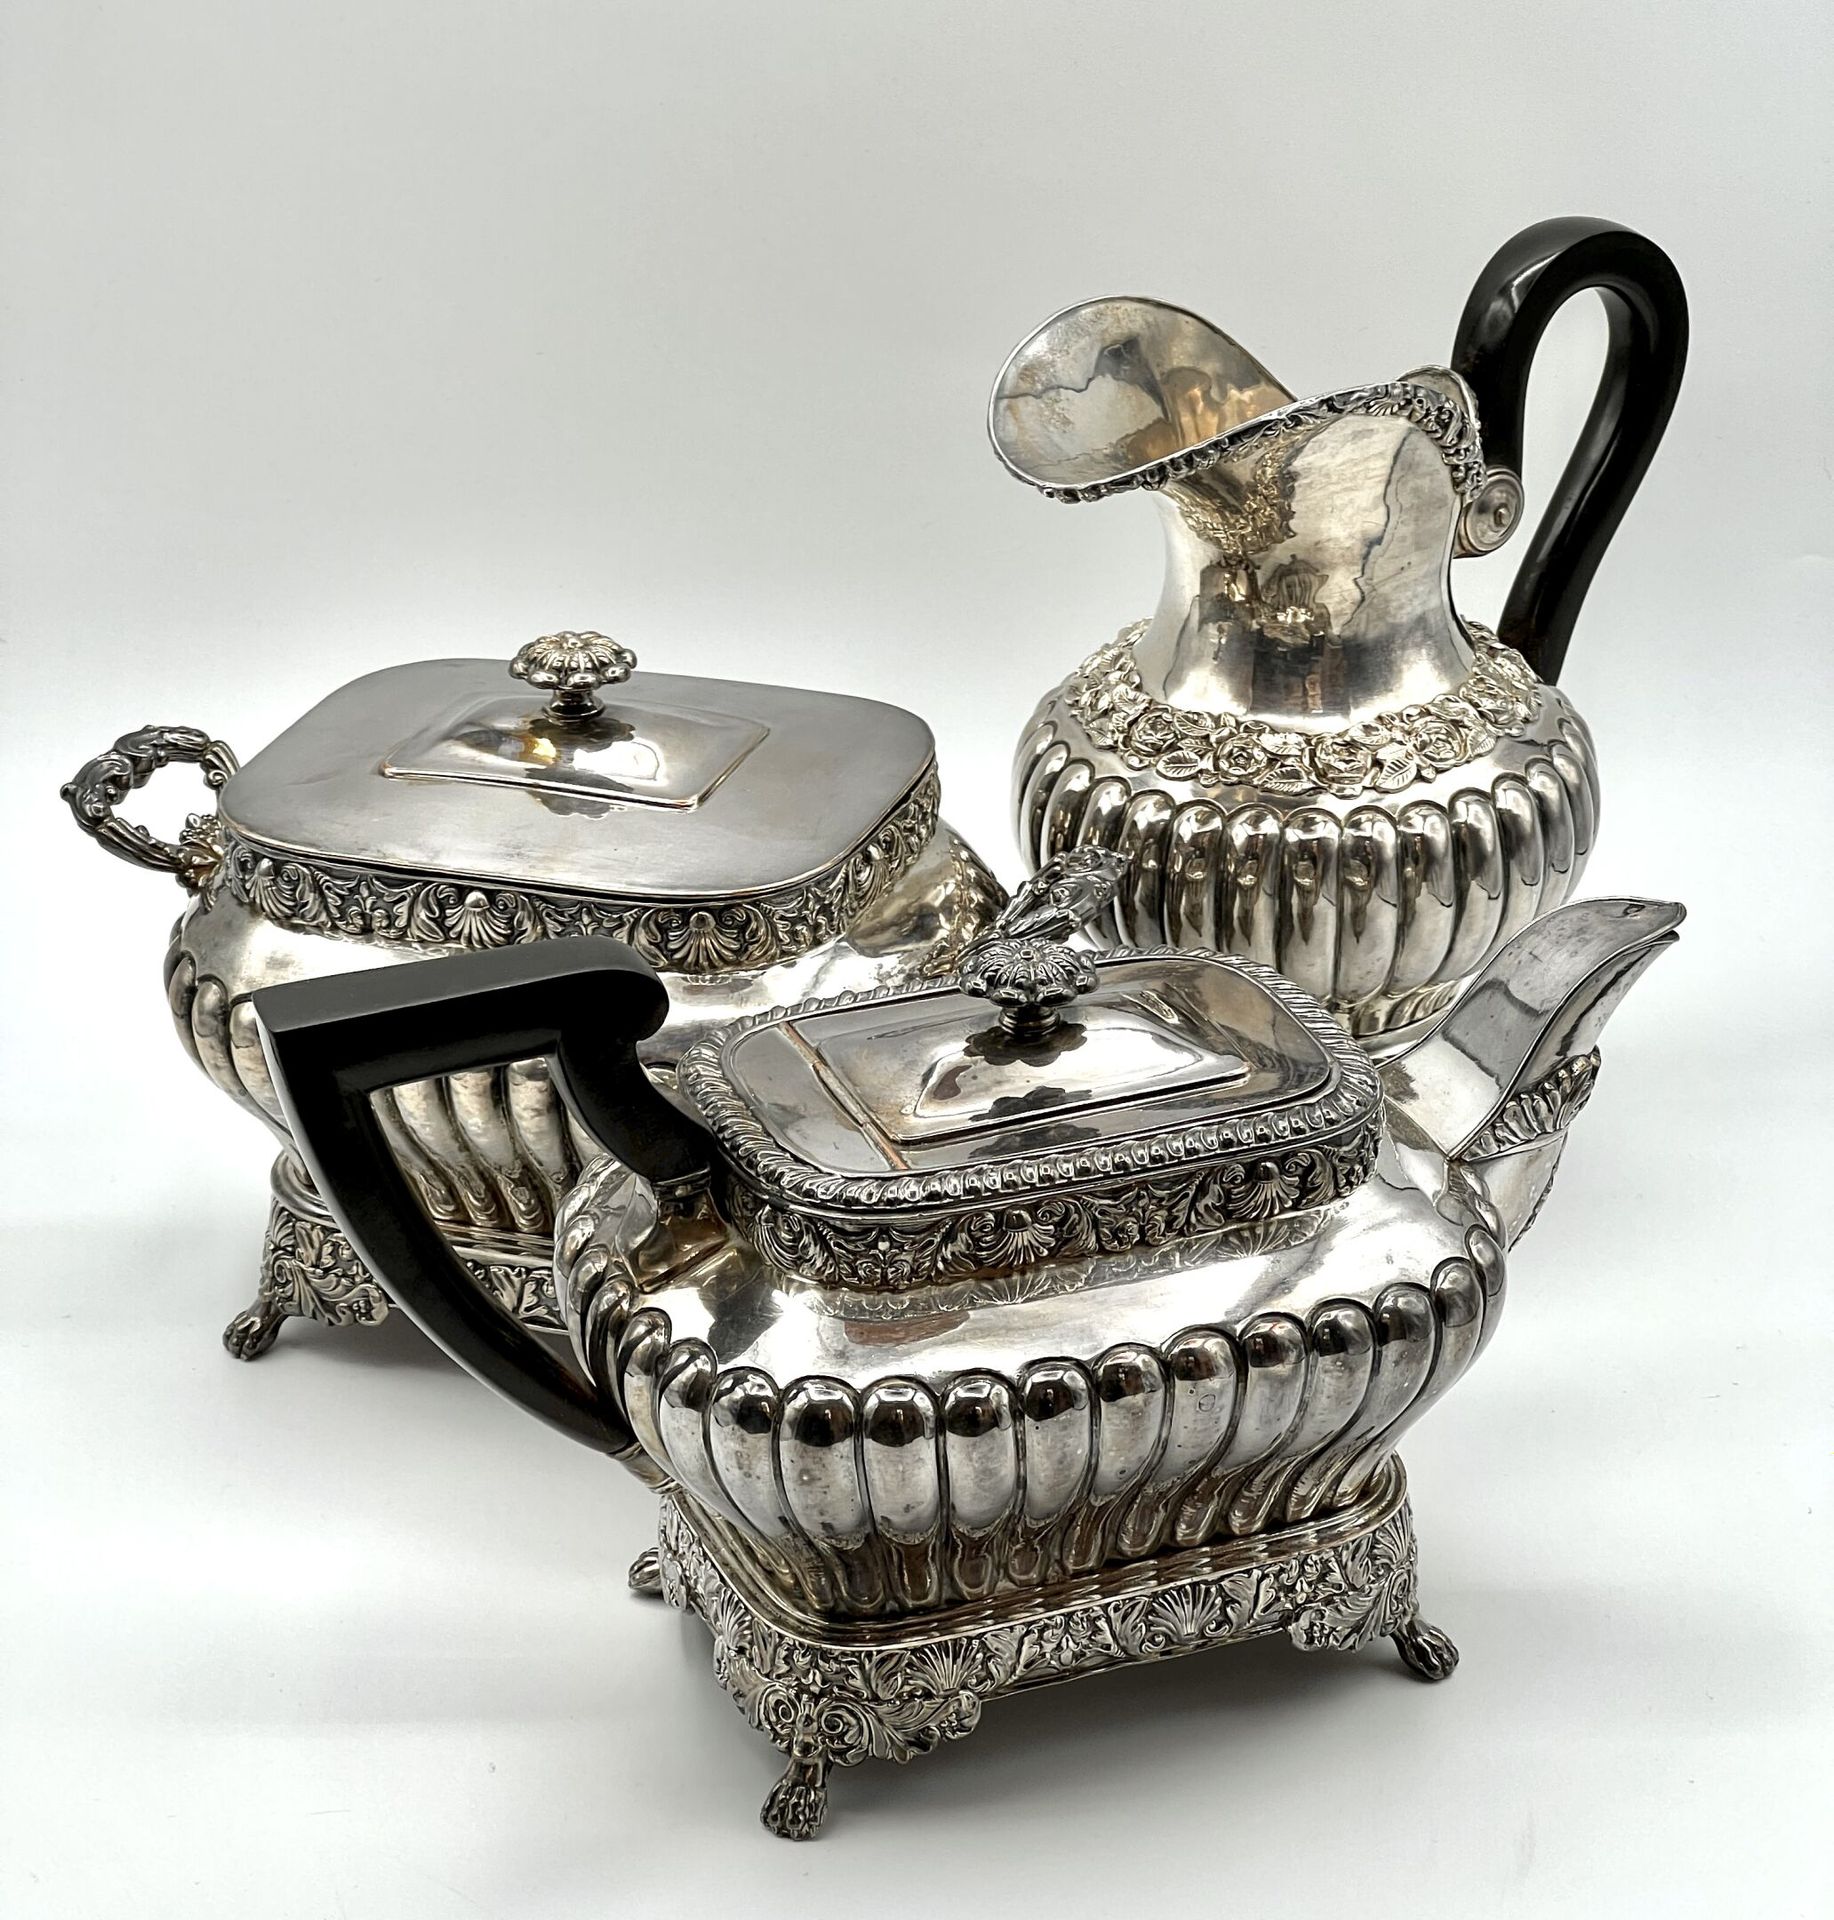 Null 镀银茶具包括: 
- 咖啡壶
- 牛奶壶
- 有盖糖碗